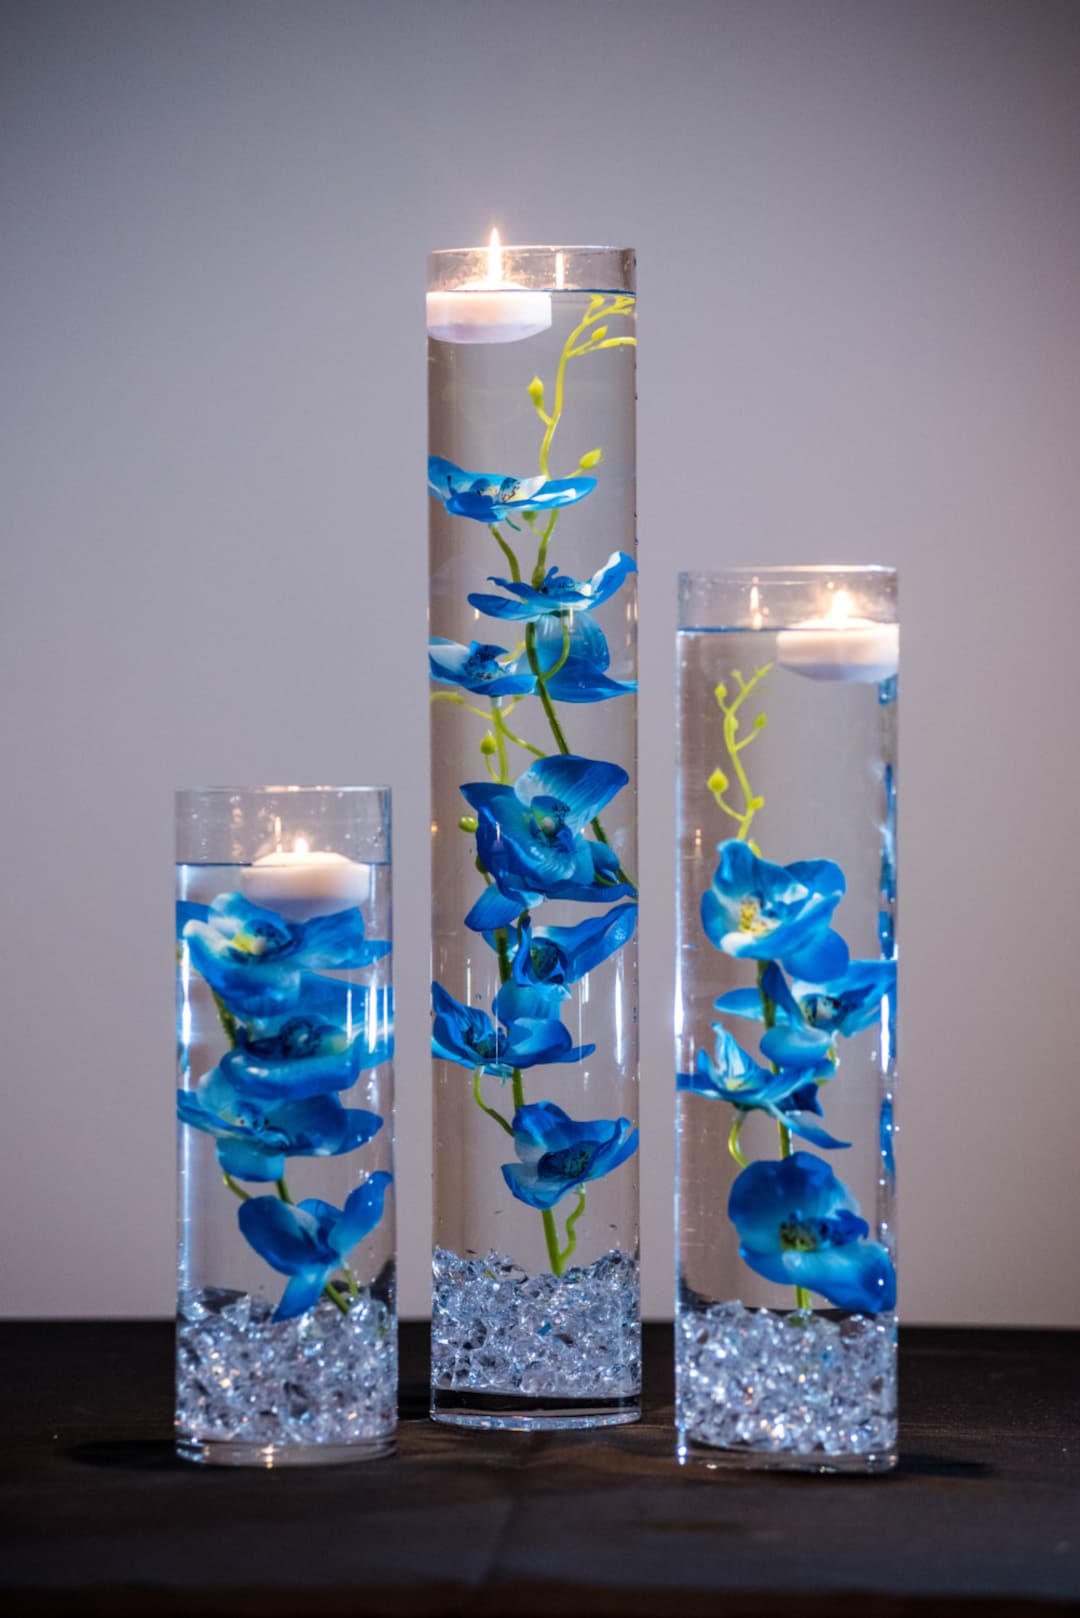 Light Blue Acrylic Rain Drop Beads Decorative Vase Filler